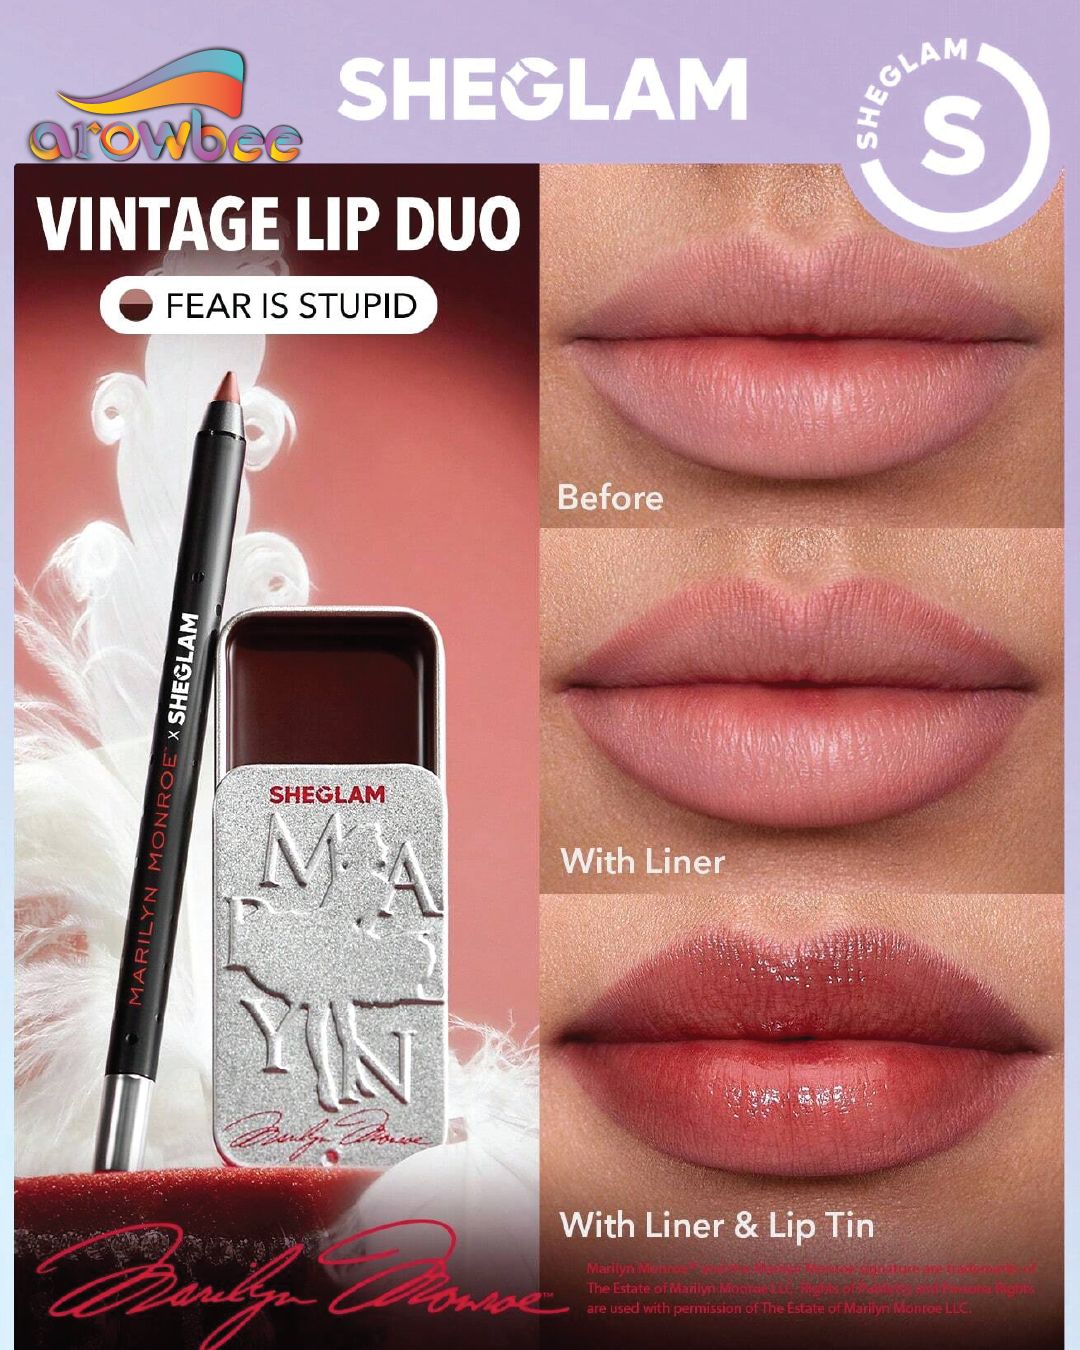 Marilyn Monroe X SHEGLAM Vintage Lip Duo